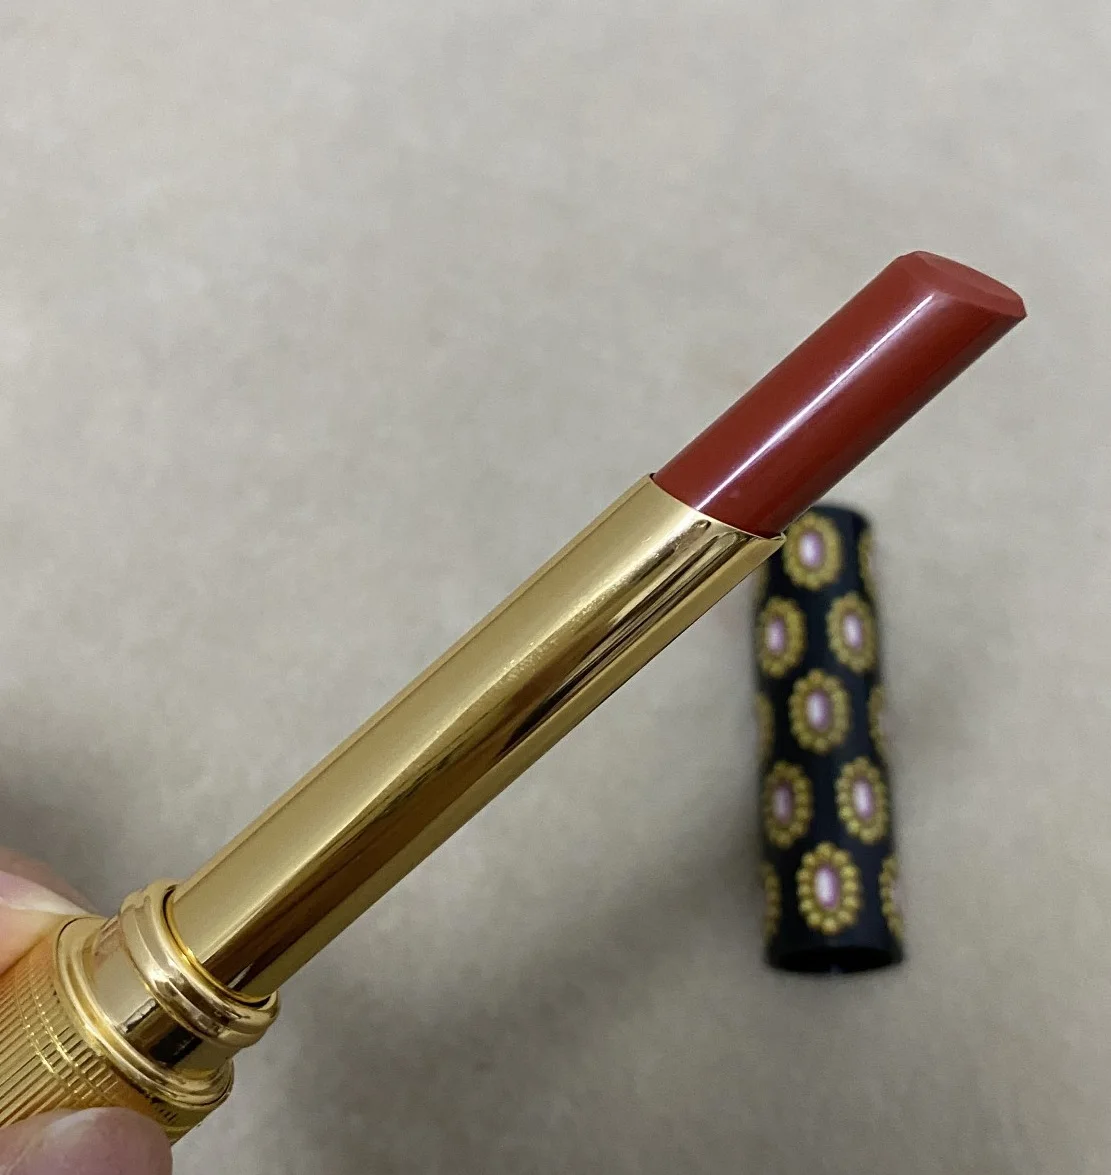 

Wholesale NEW Makeup Lipstick 1.8g Matte Moisturizing Nude Sexy Red Long Lasting Cosmetics +GIFT